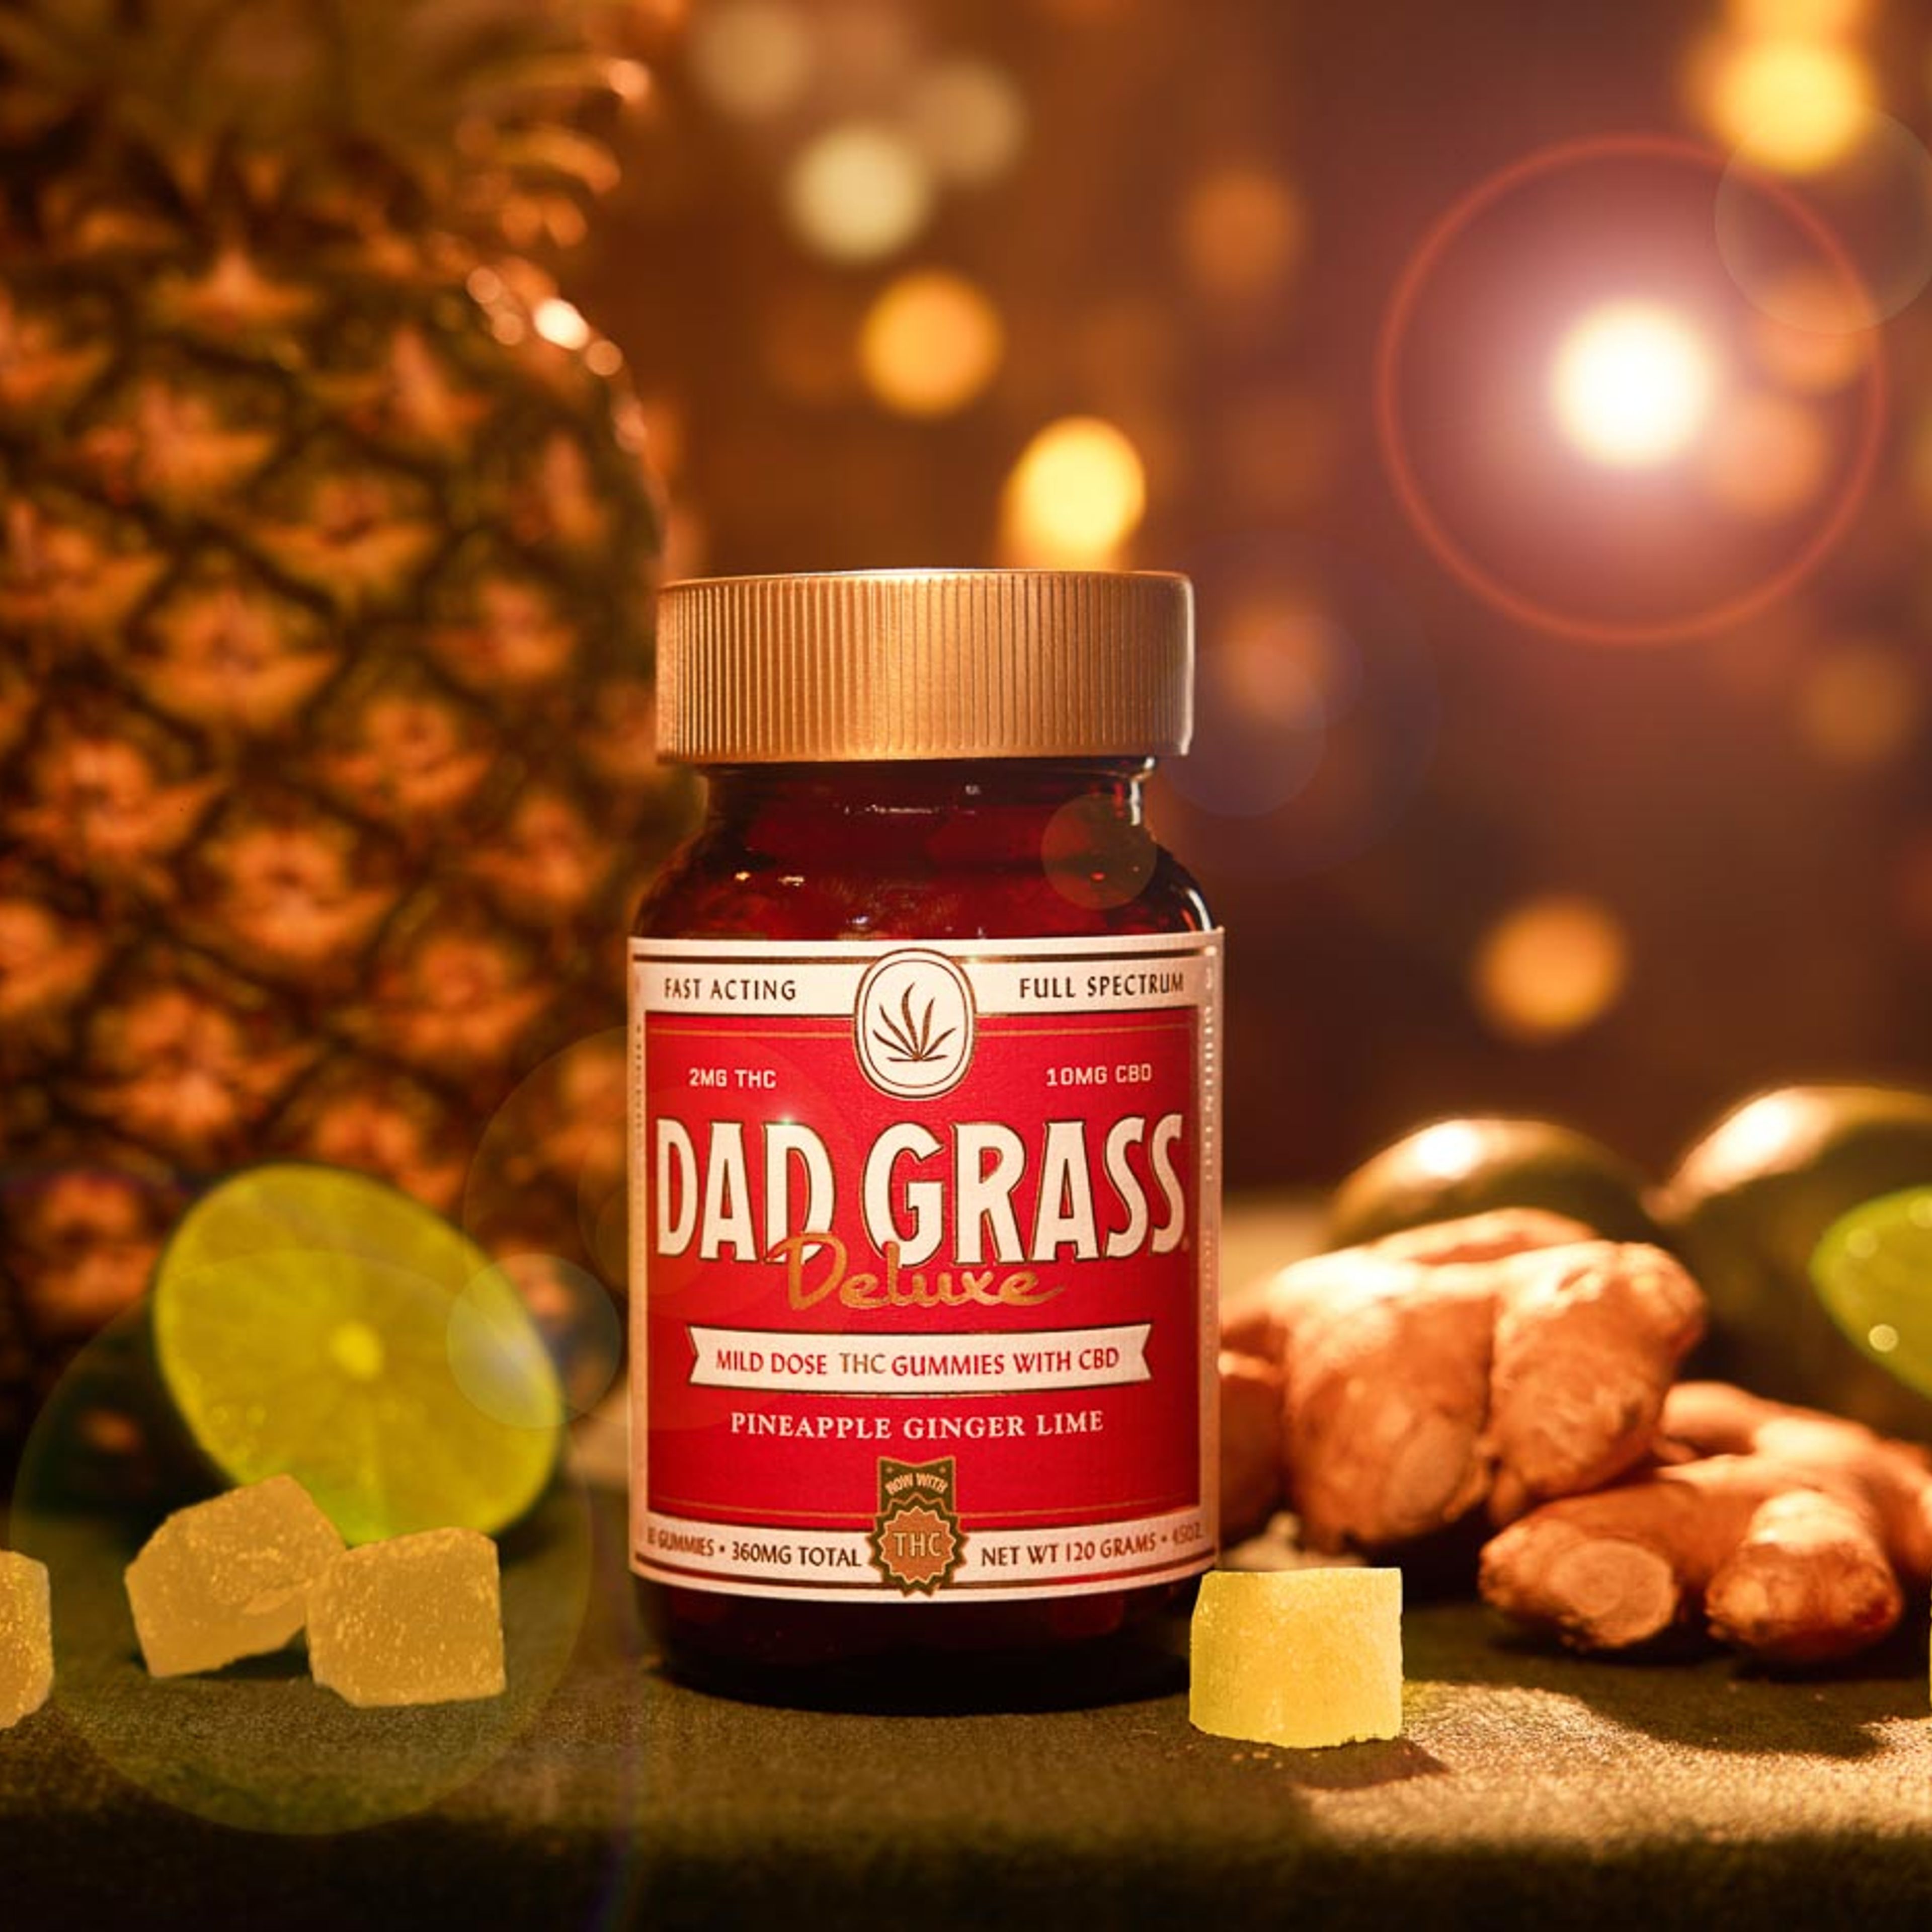 Dad Grass Deluxe THC + CBD Gummies